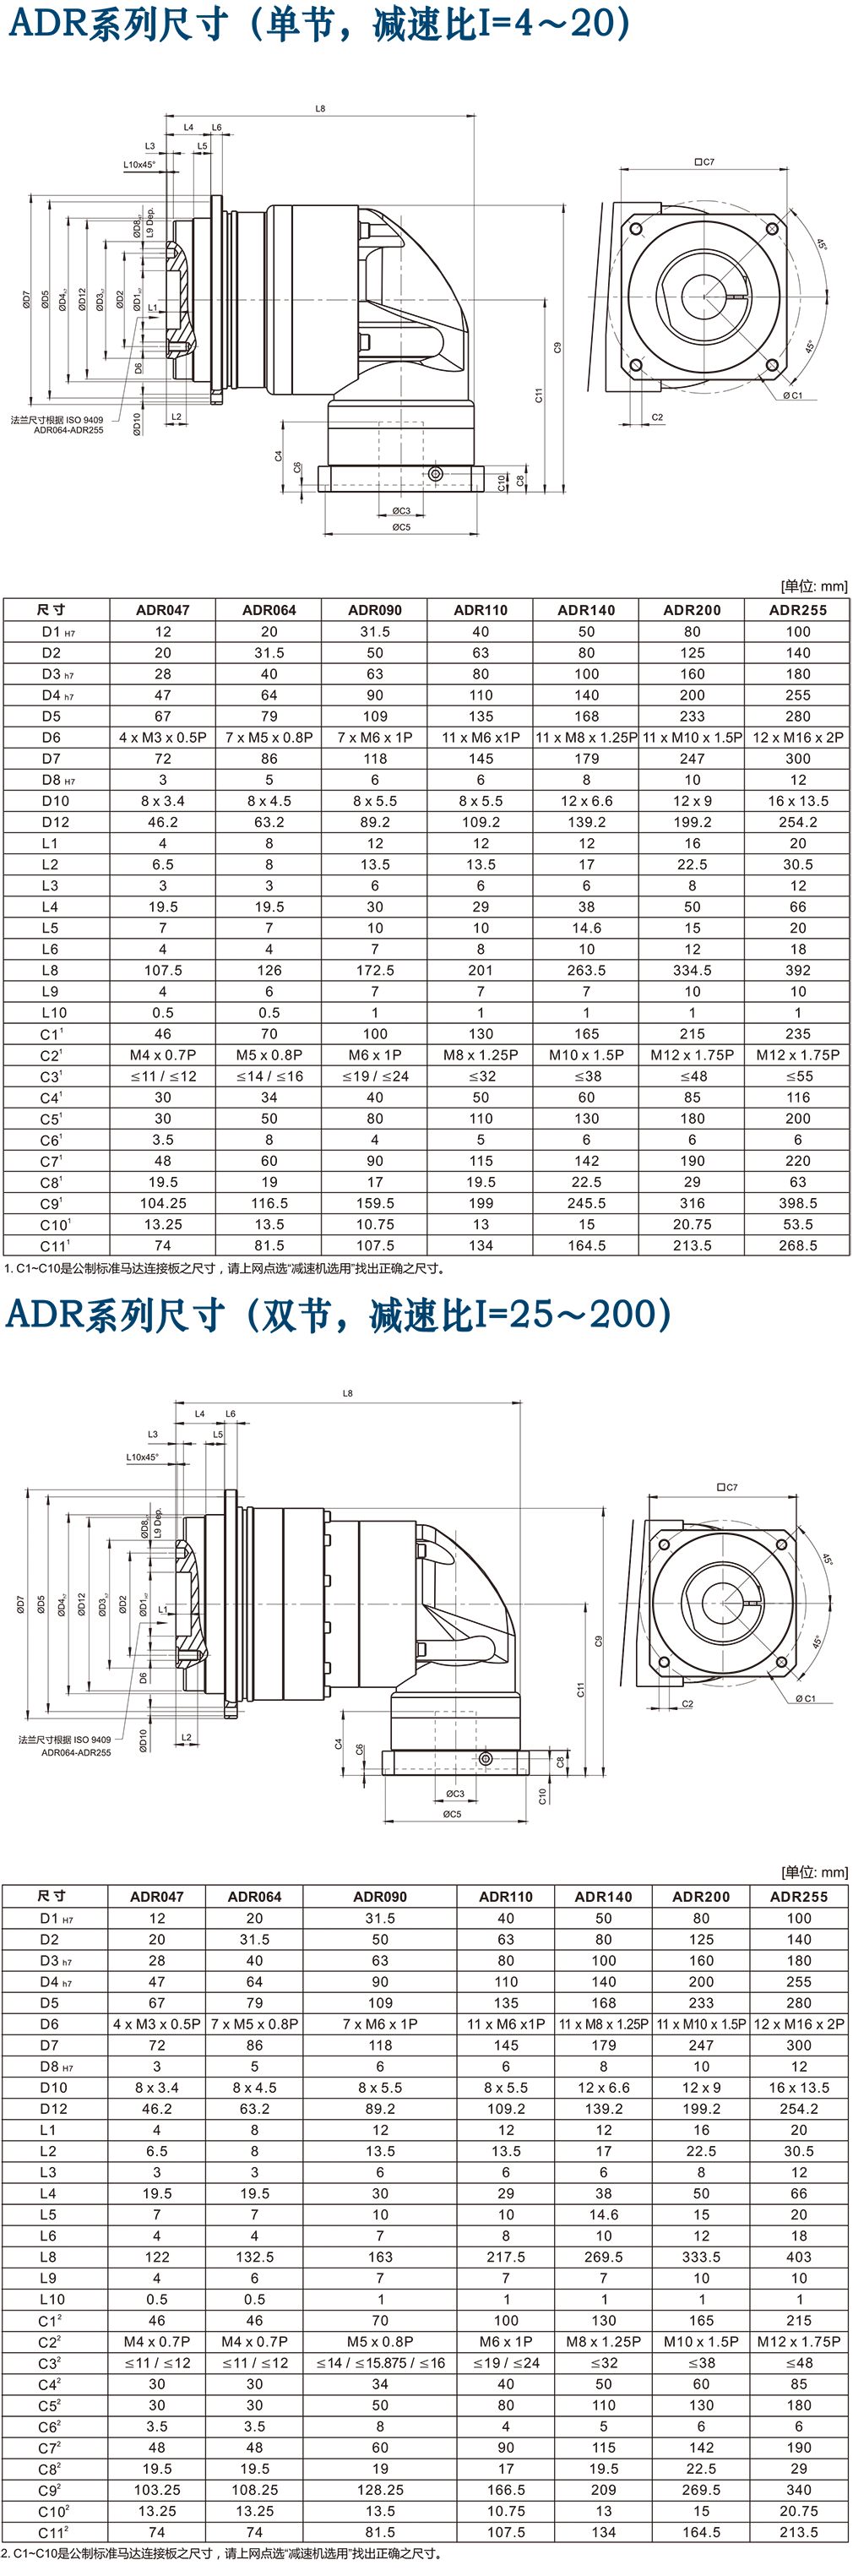 ADR-台湾减速机.png